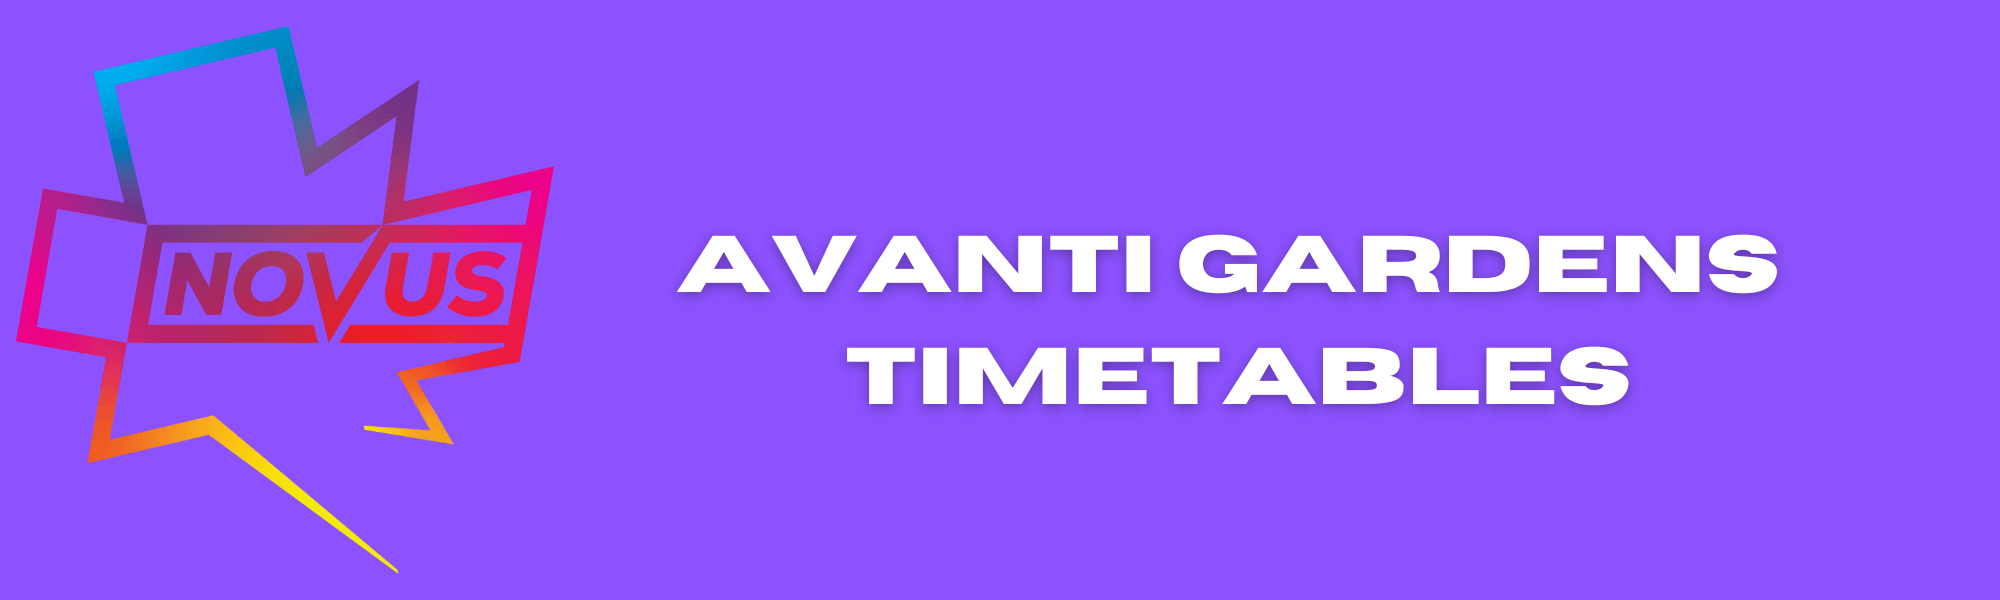 Avanti Gardens Timetables